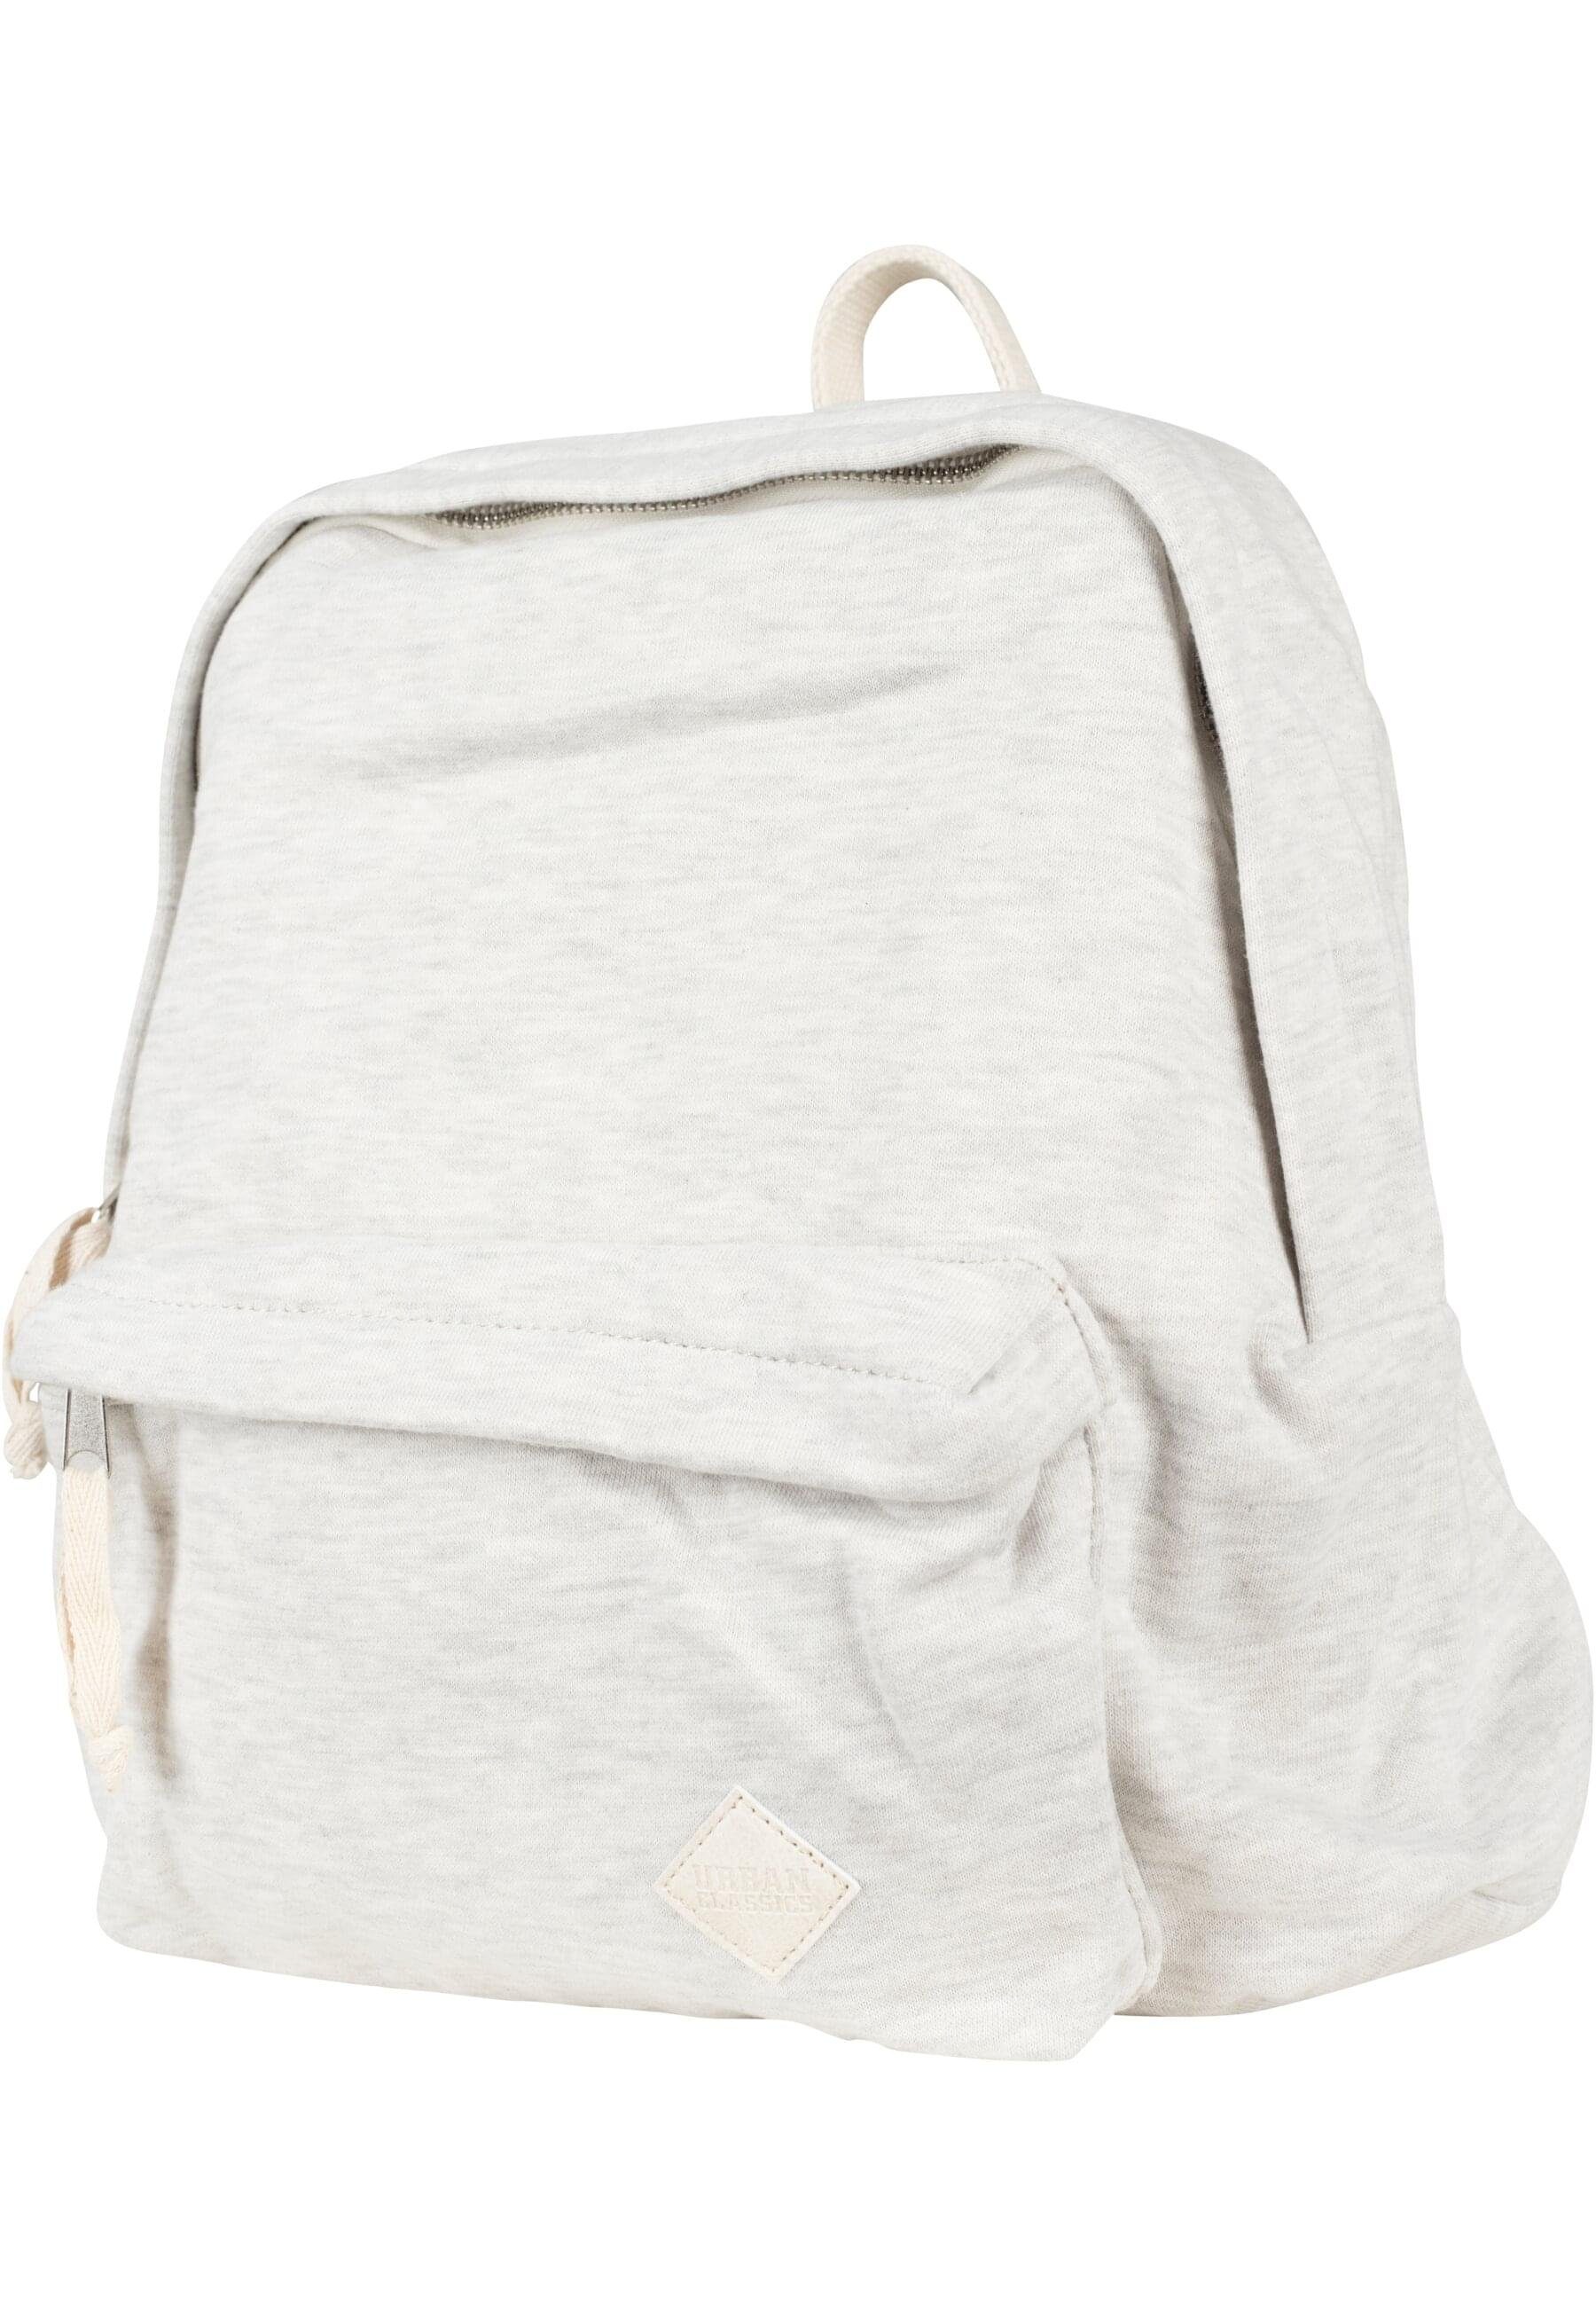 melange/offwhite Unisex URBAN Sweat offwhite Rucksack Backpack CLASSICS